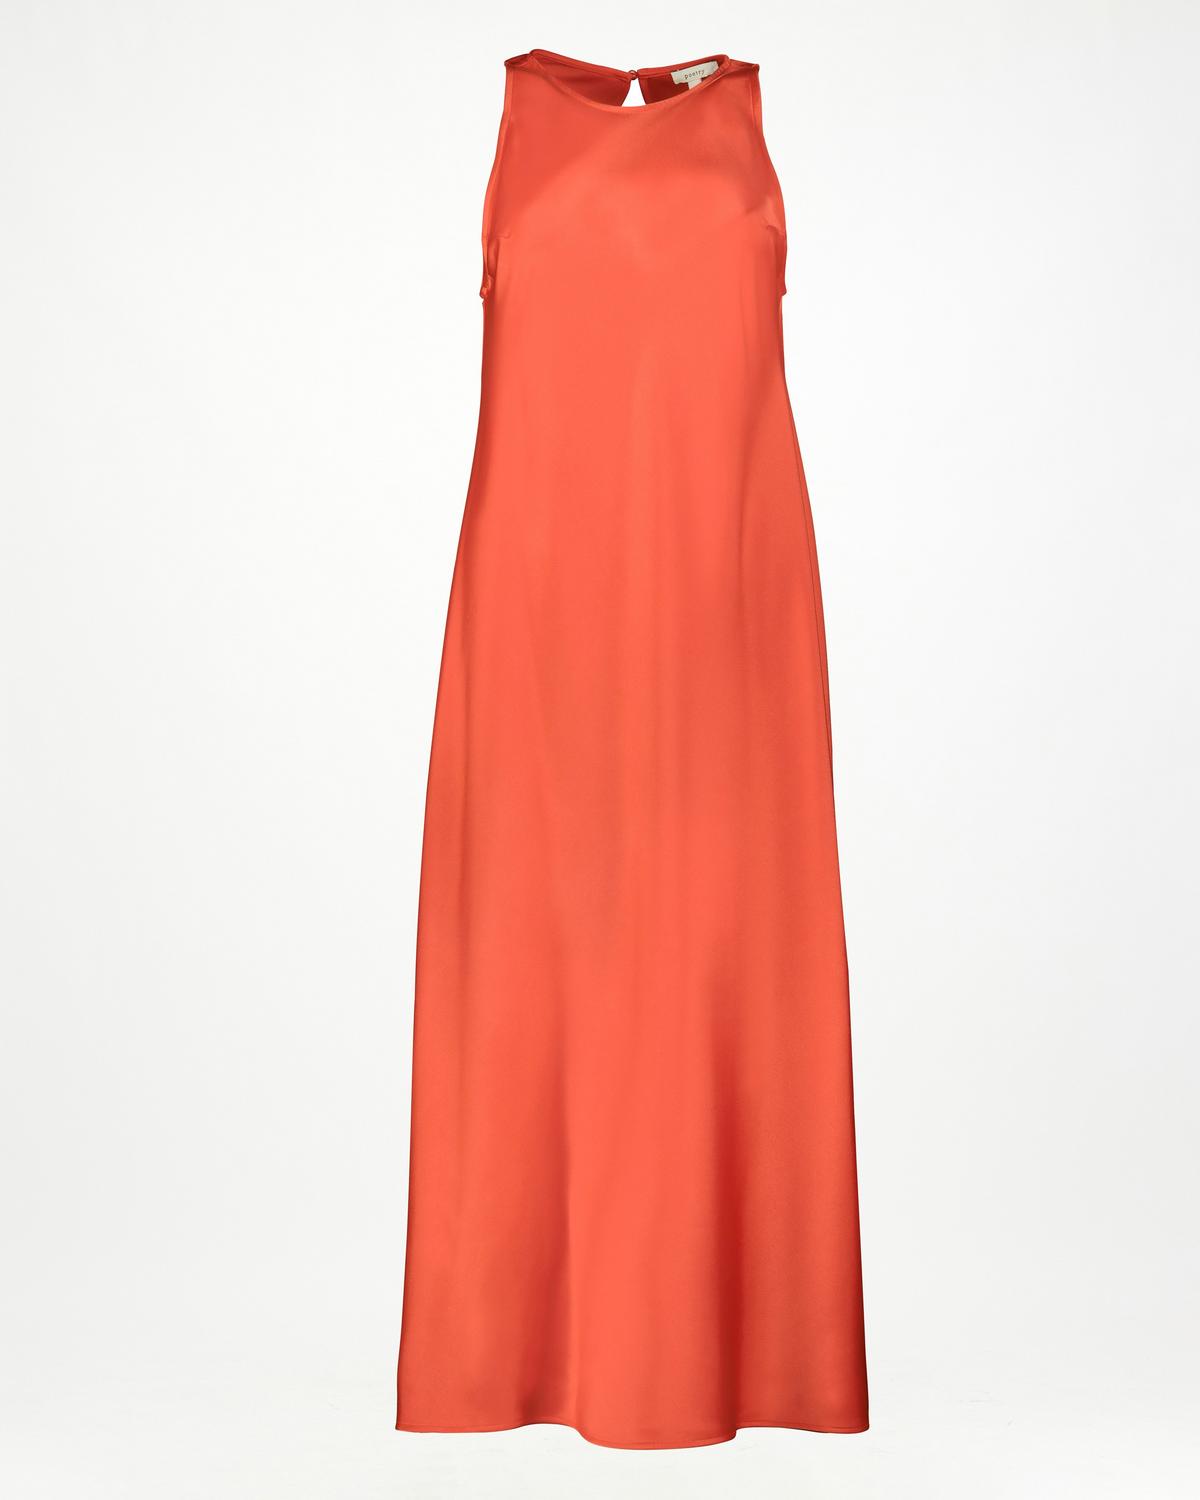 Annabelle Biased Cut Slip Dress -  orange